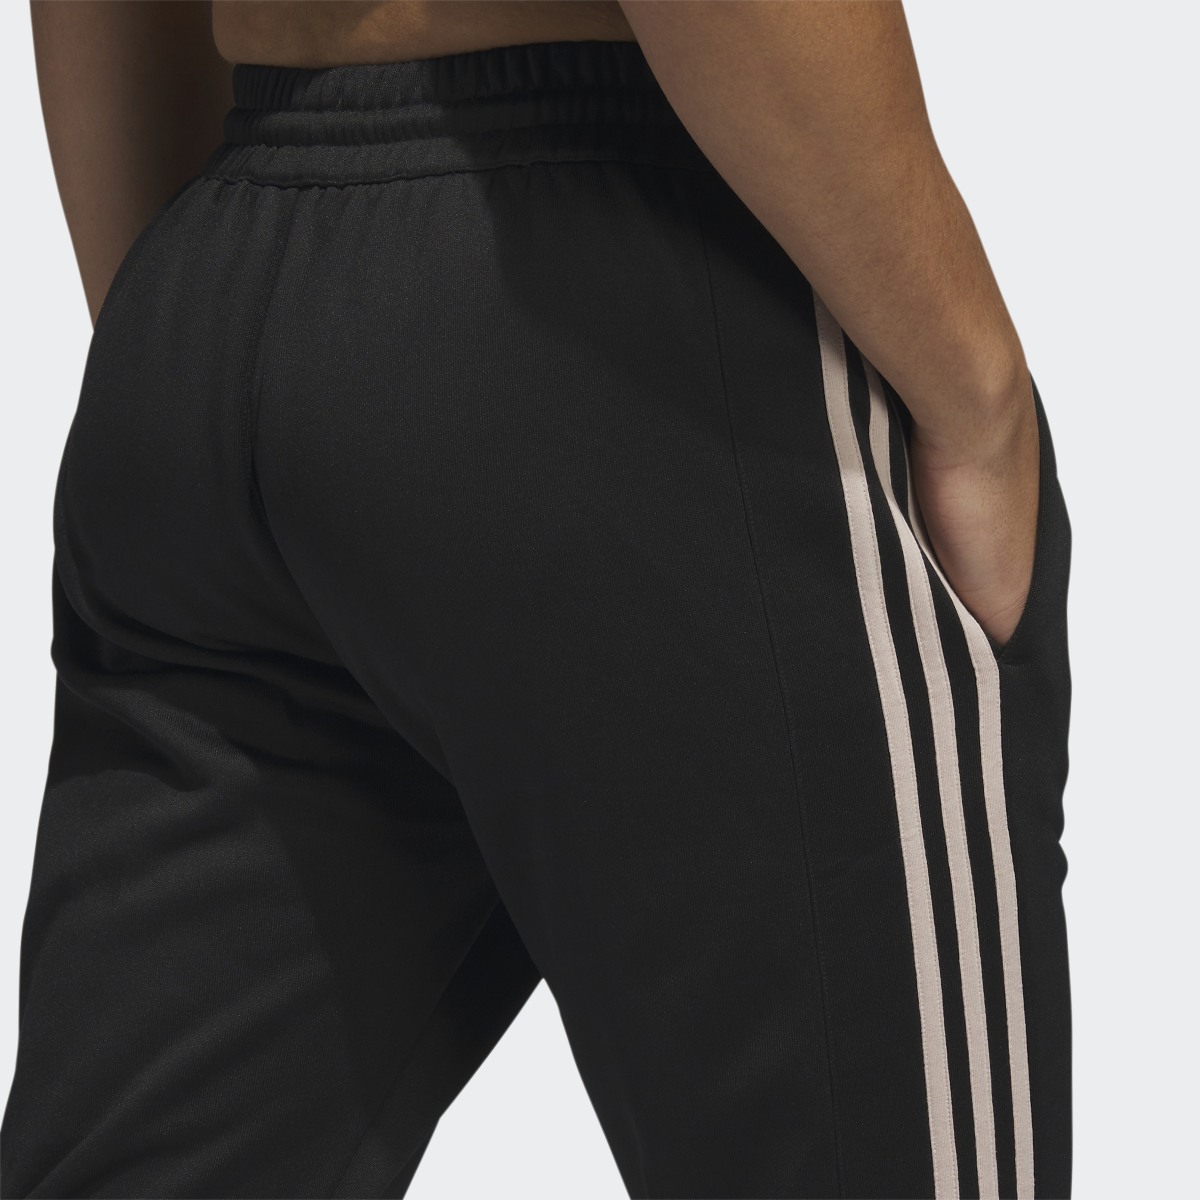 Adidas Originals Basketball Warm-Up Pants. 7